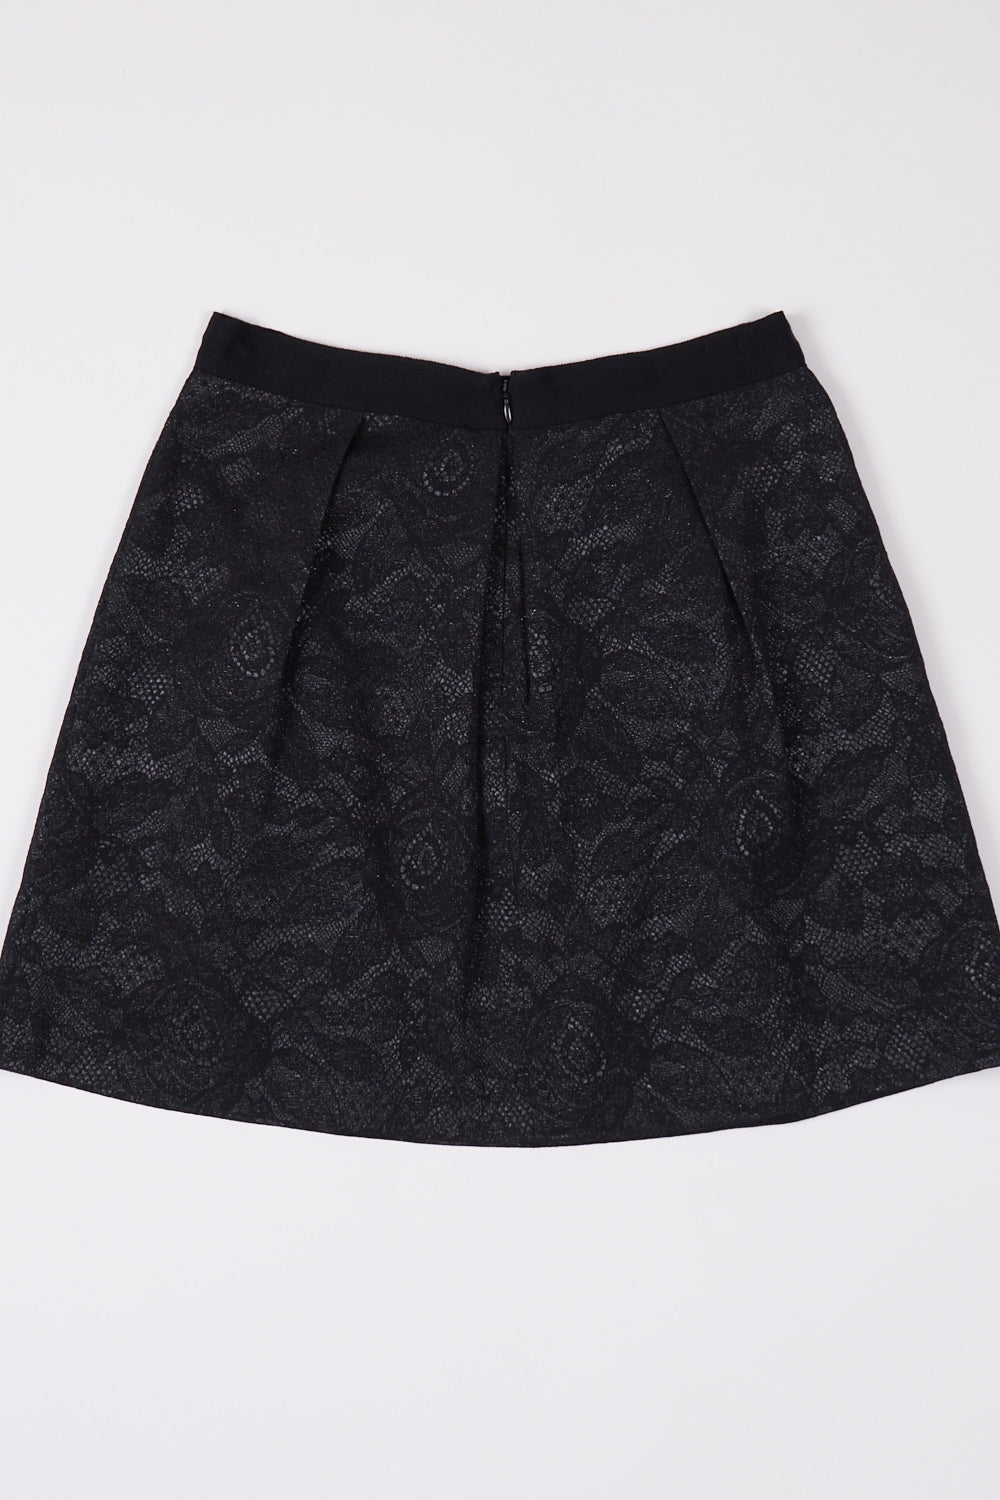 Portmans Black Metallic Detail Pleated Skirt 10